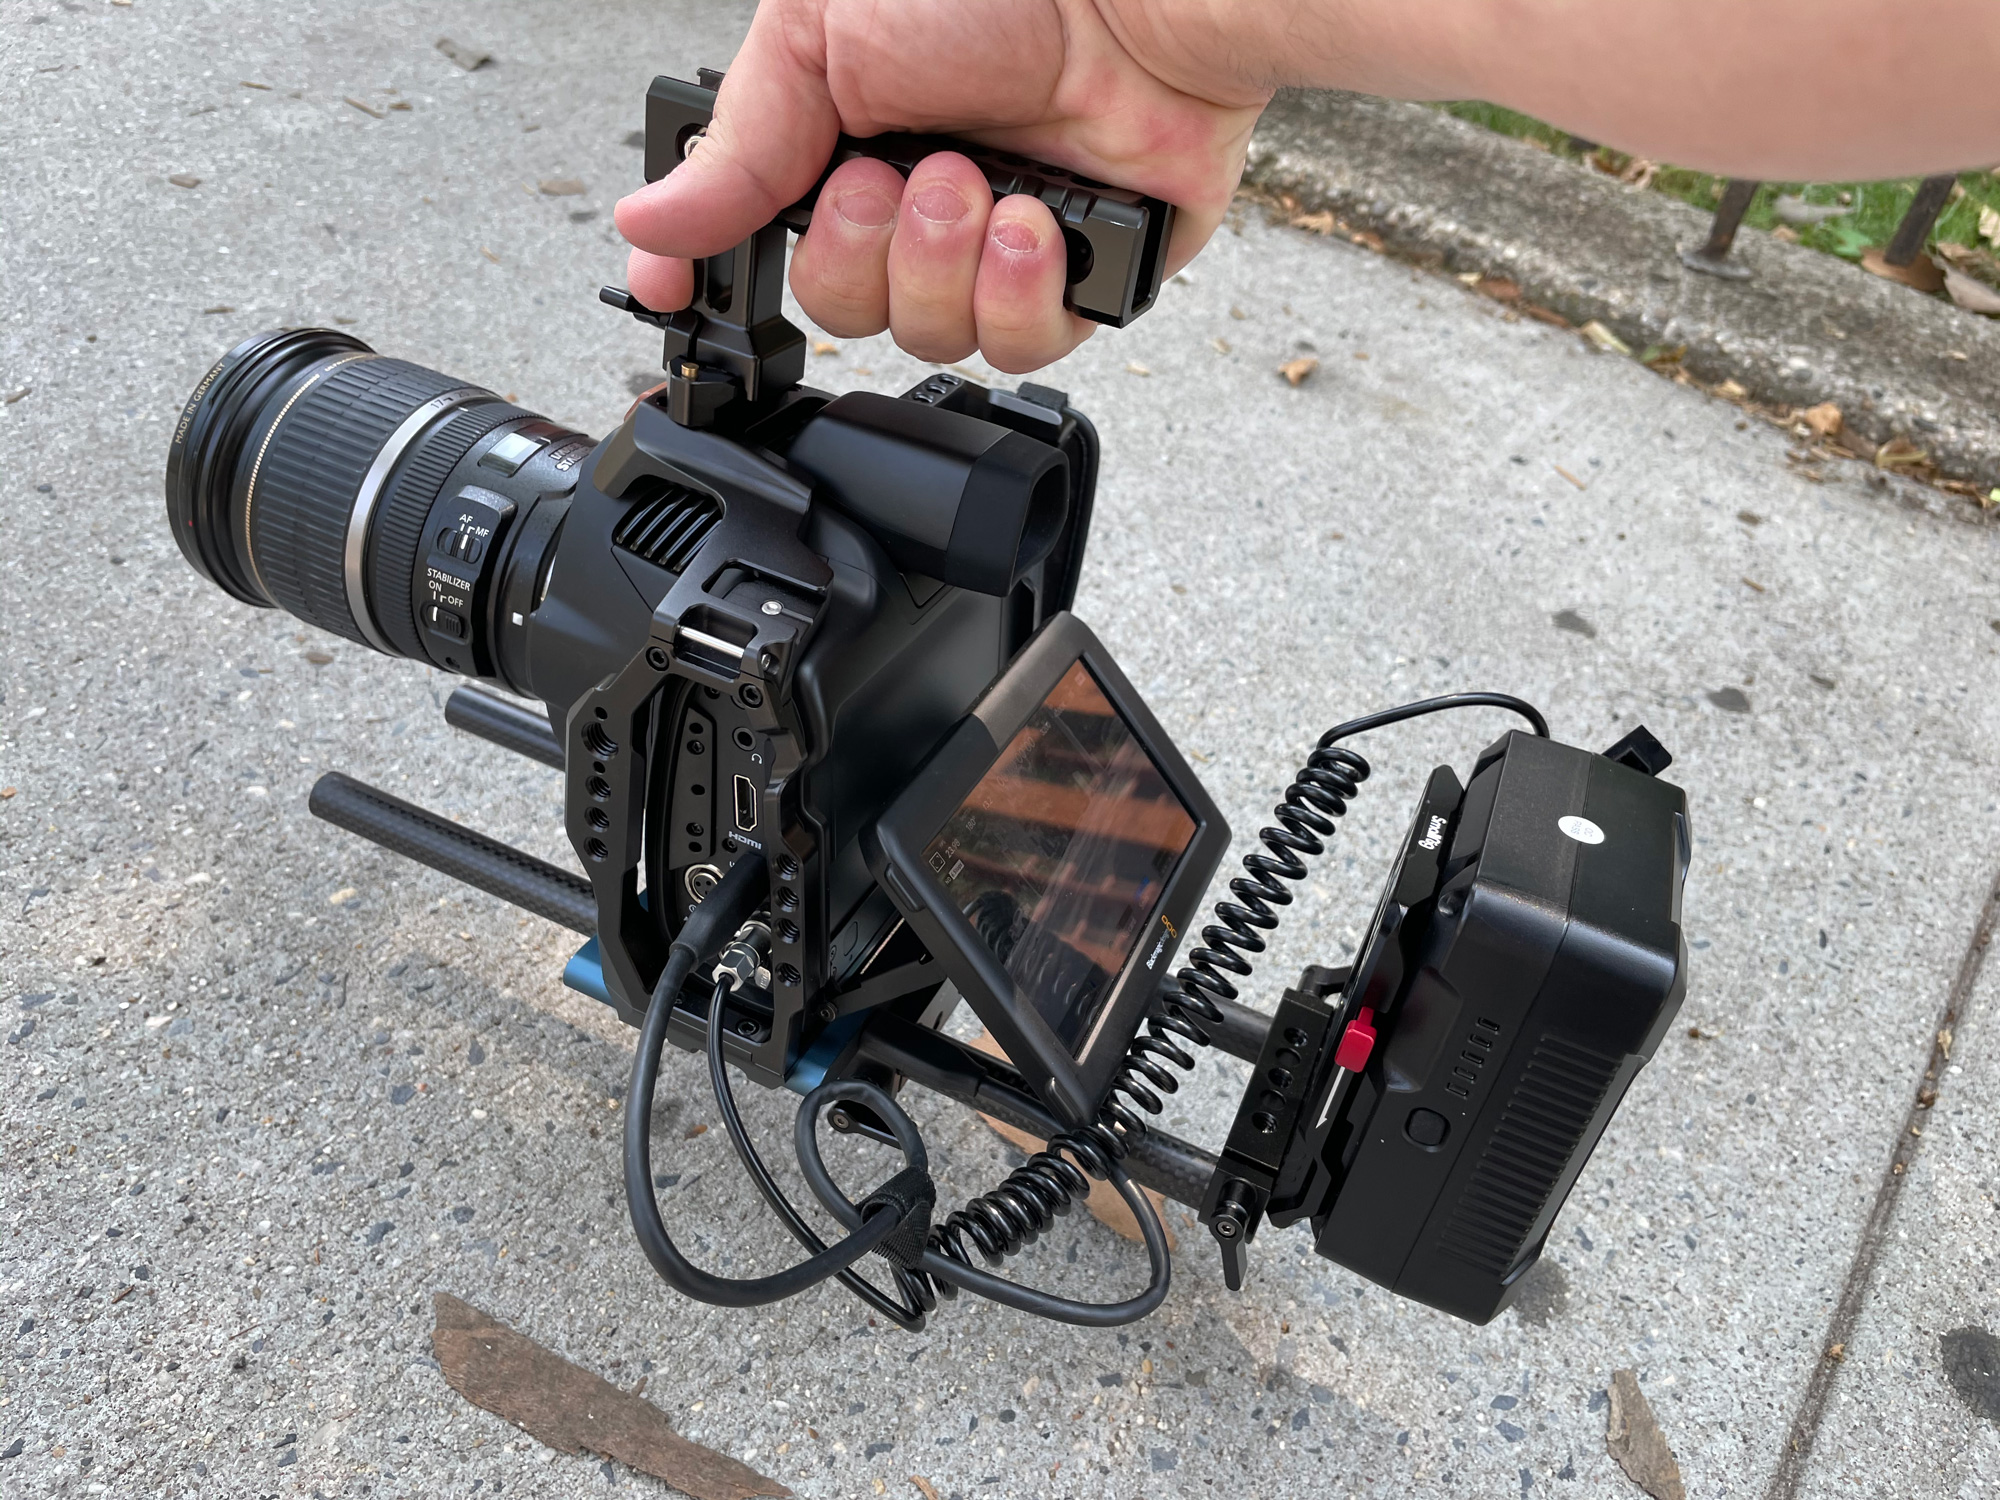 Blackmagic Pocket Cinema Camera 6K Pro Review: Worth the Weight